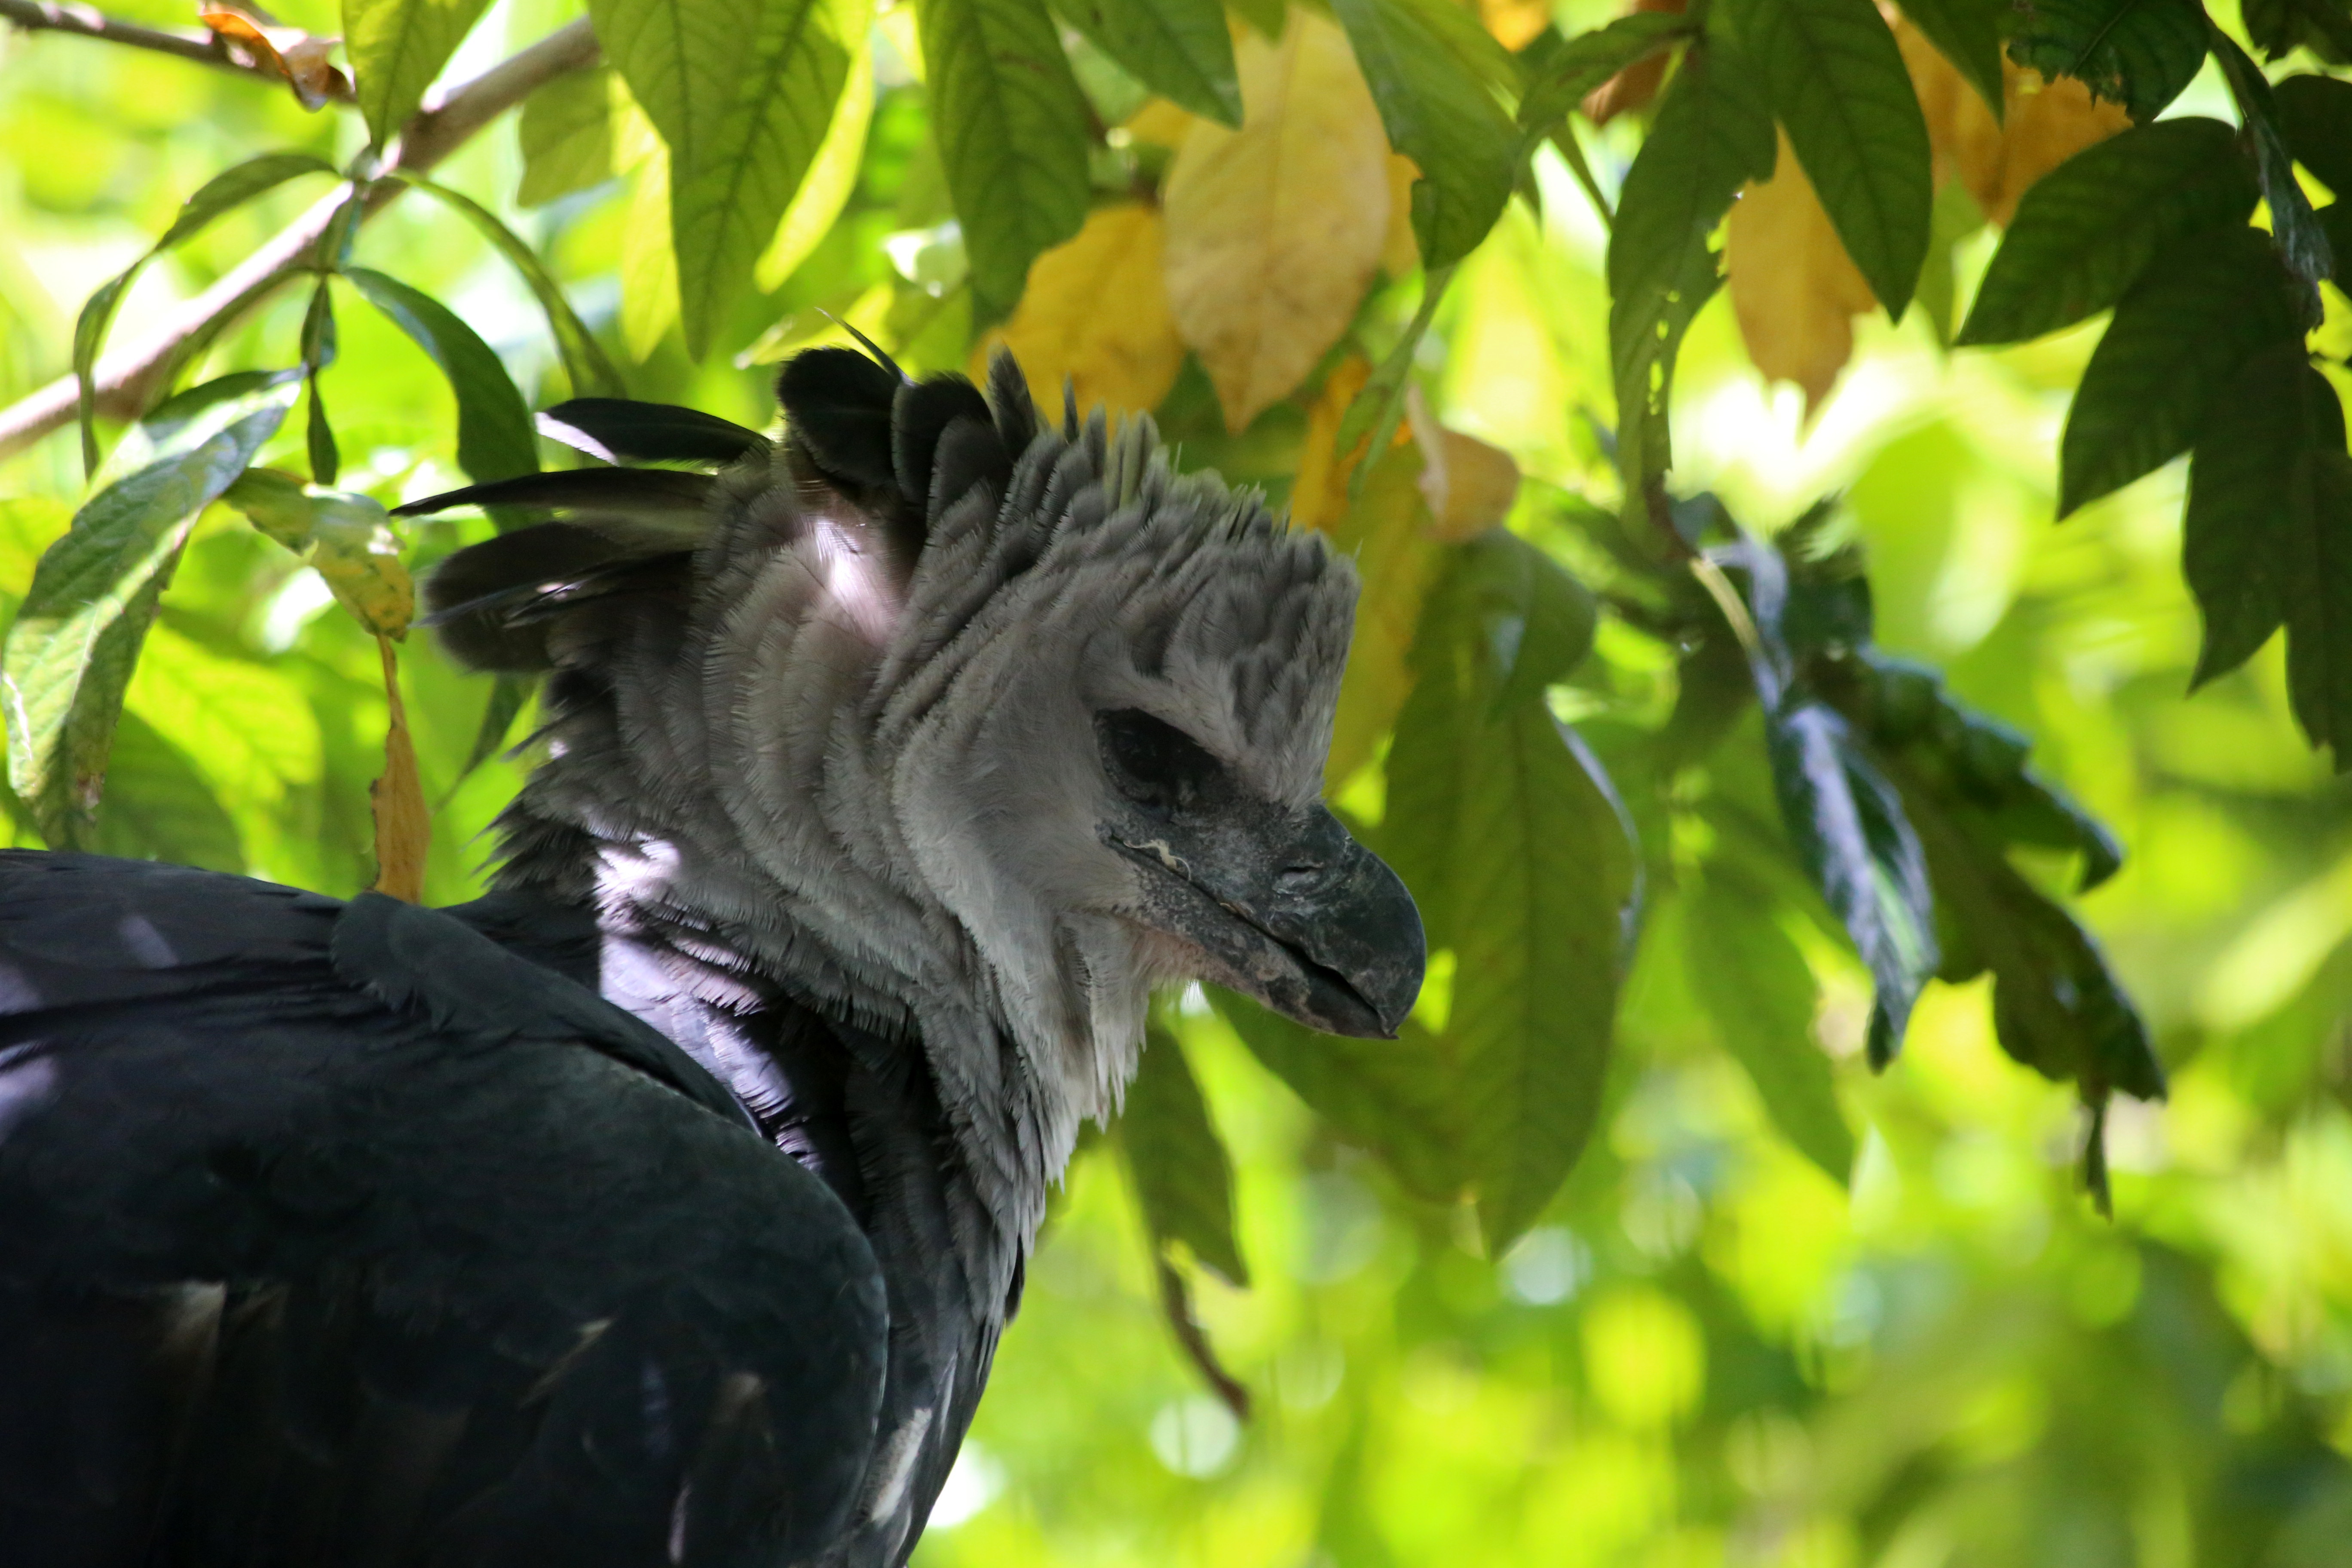 Majestic Harpy Eagle. Photo taken by cuatrock77, published on Flickr